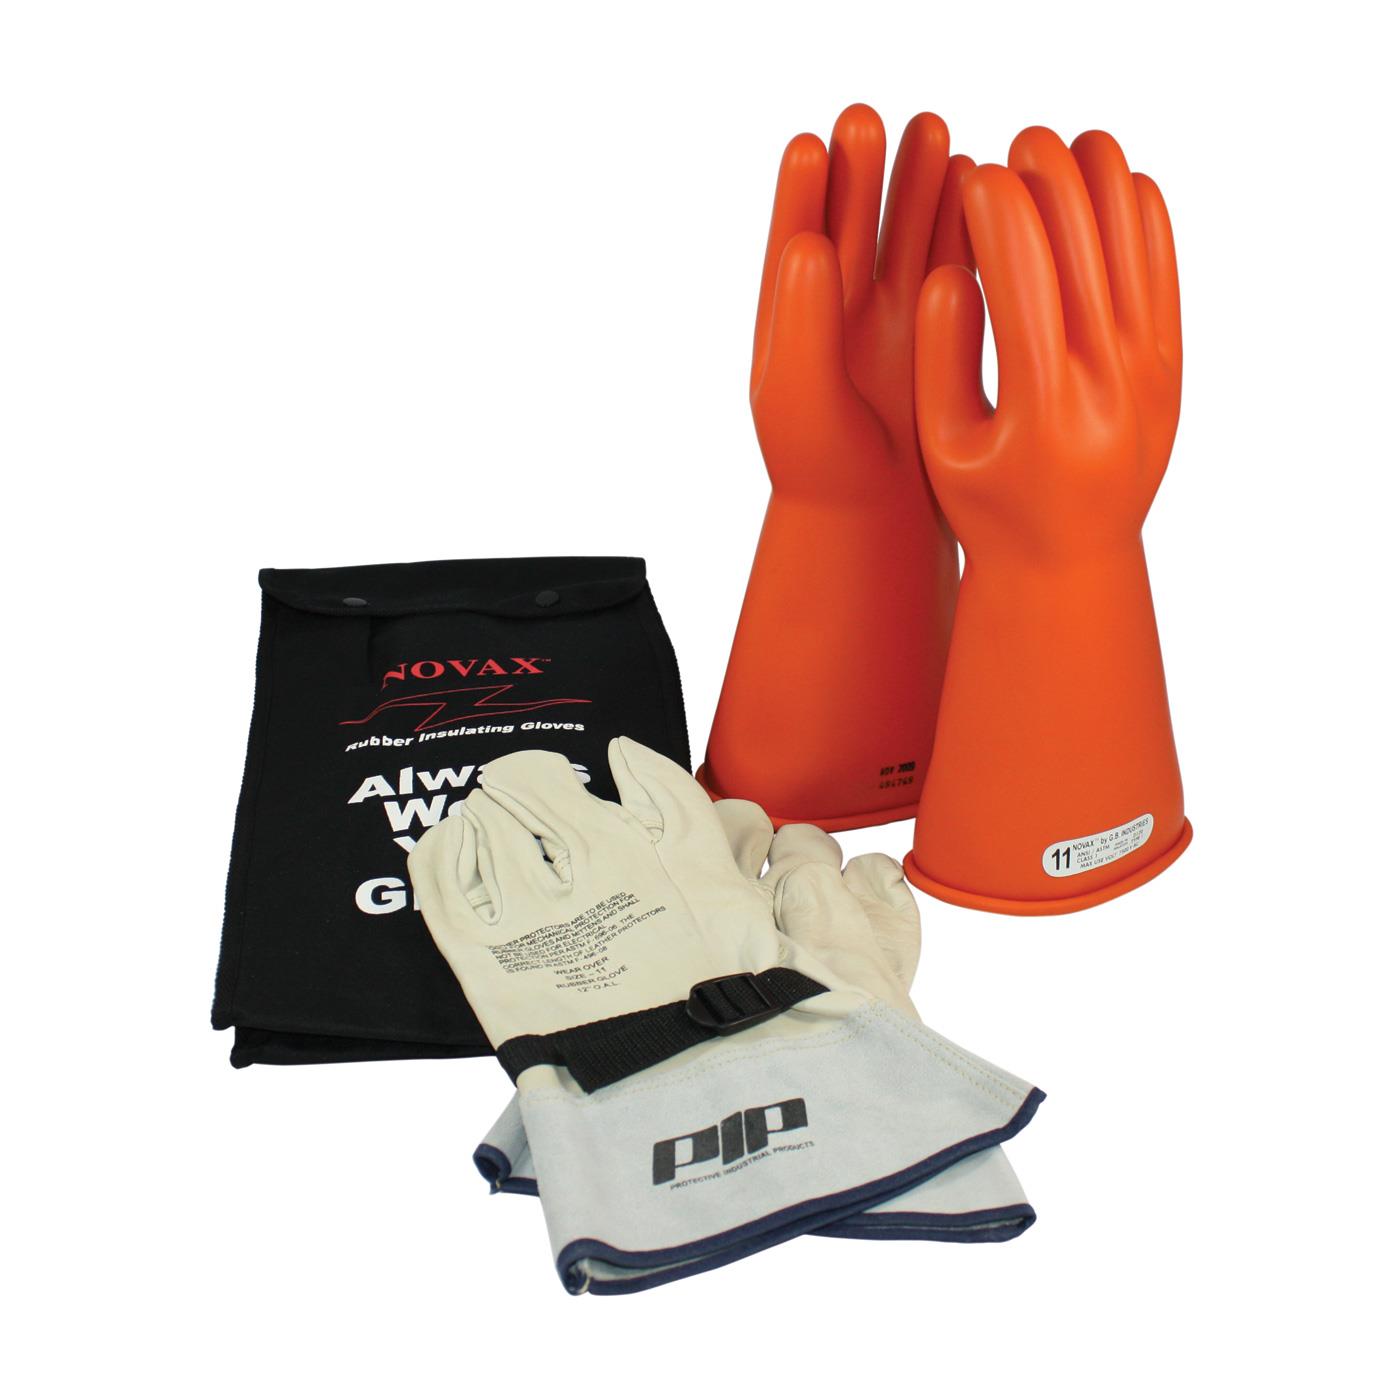 NOVAX ESP GLOVE KIT CLASS 1 ORANGE - Electrical Gloves